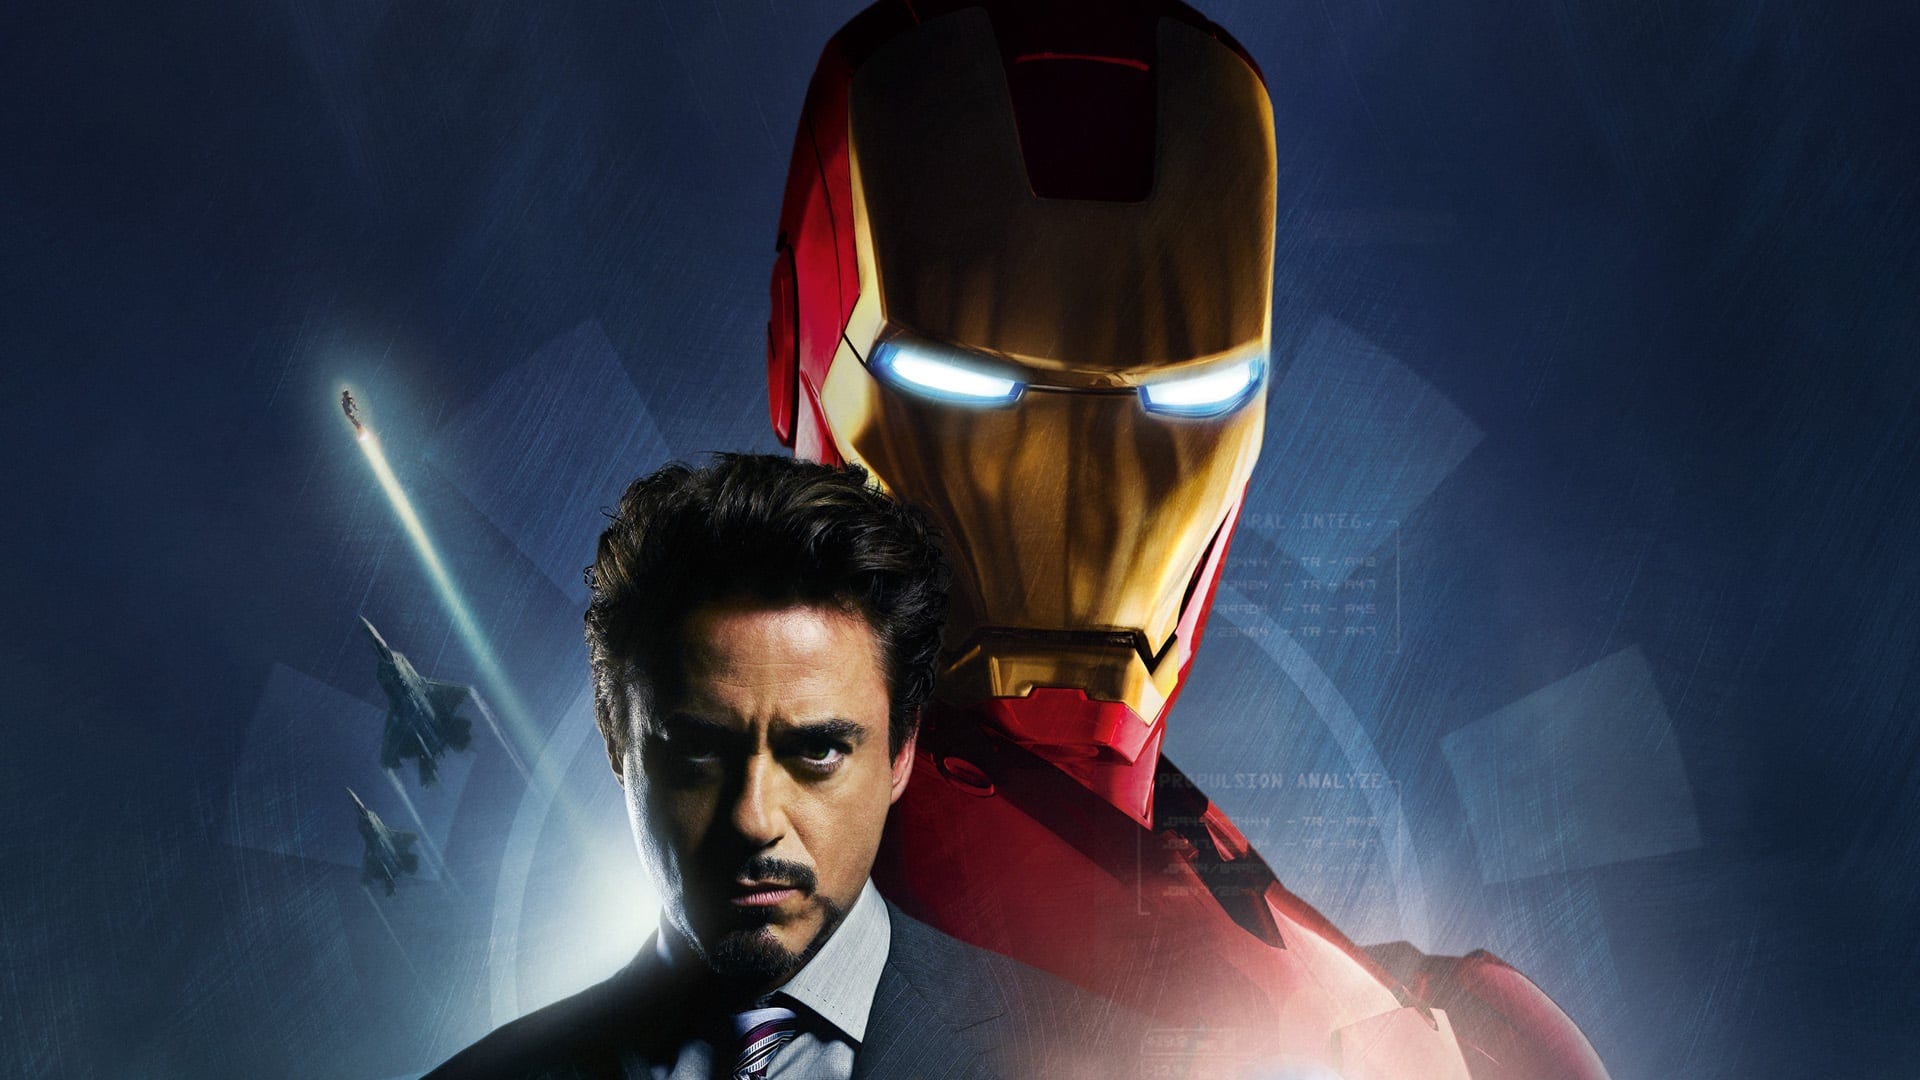 Hd Iron Man 08 Film Complet Streaming Vf En Francais By Yayme Hd Voir Iron Man 08 Feb 21 Medium